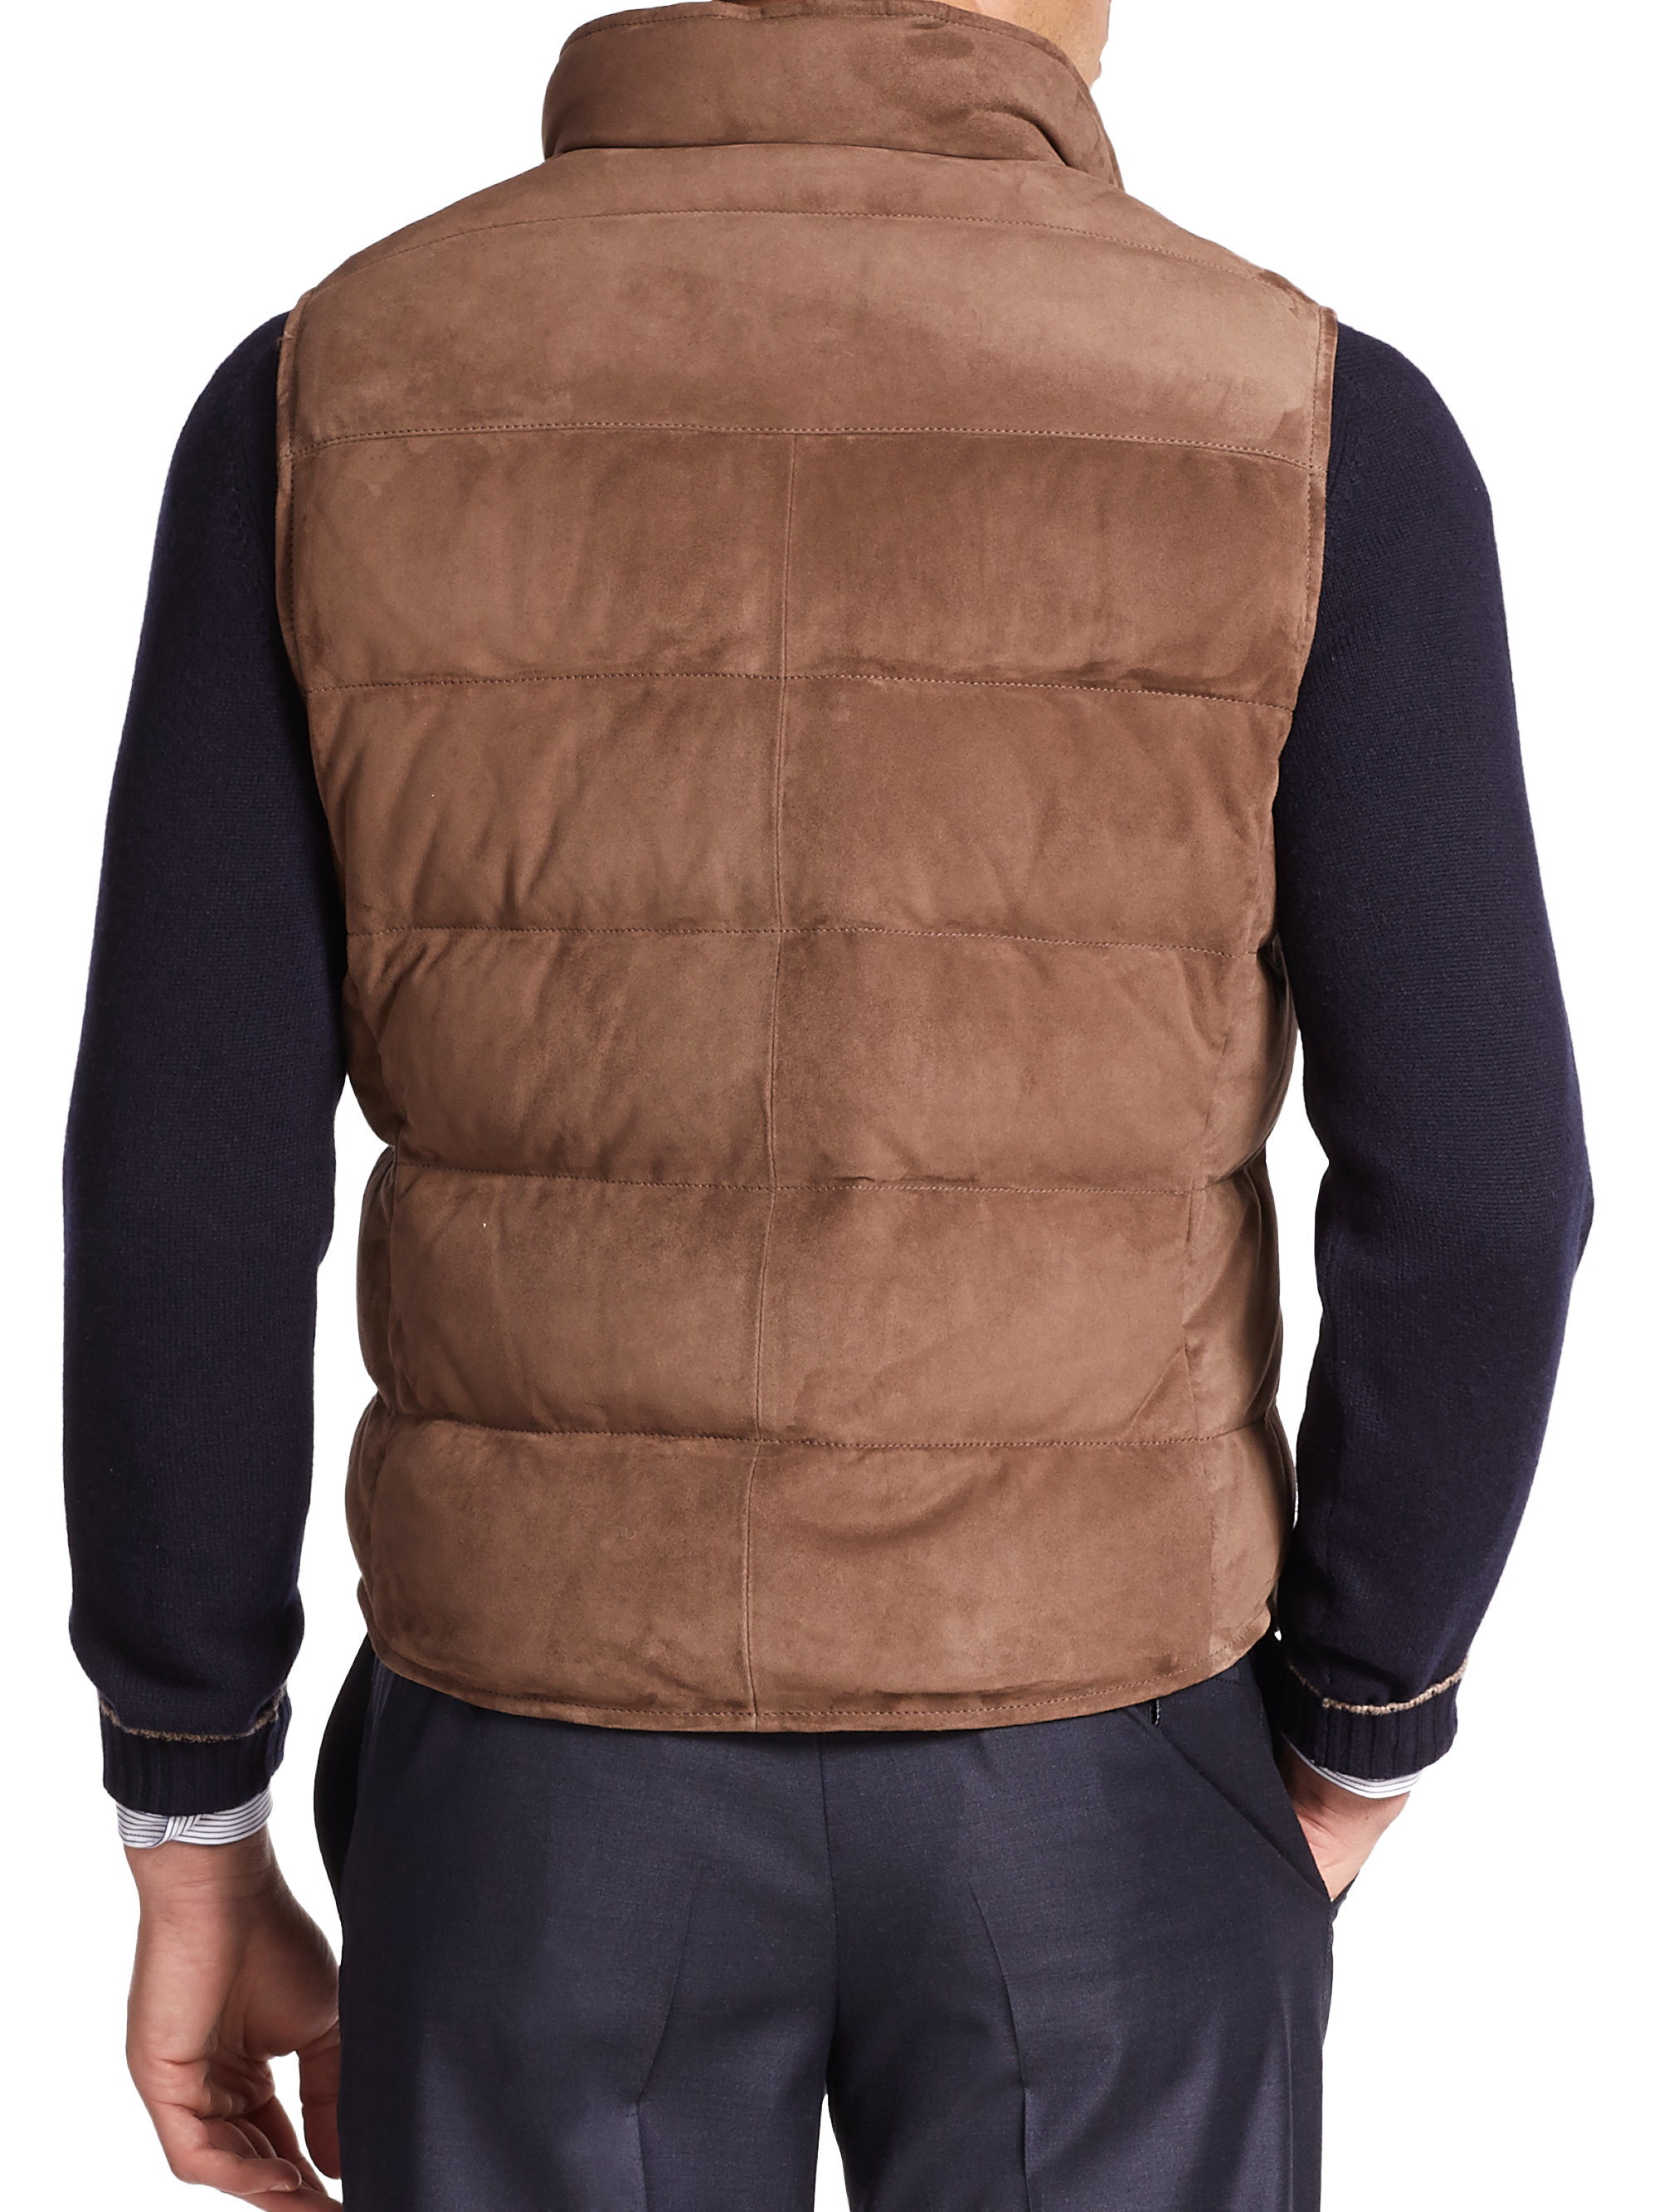 Lyst - Brunello Cucinelli Suede Puffer Vest in Brown for Men